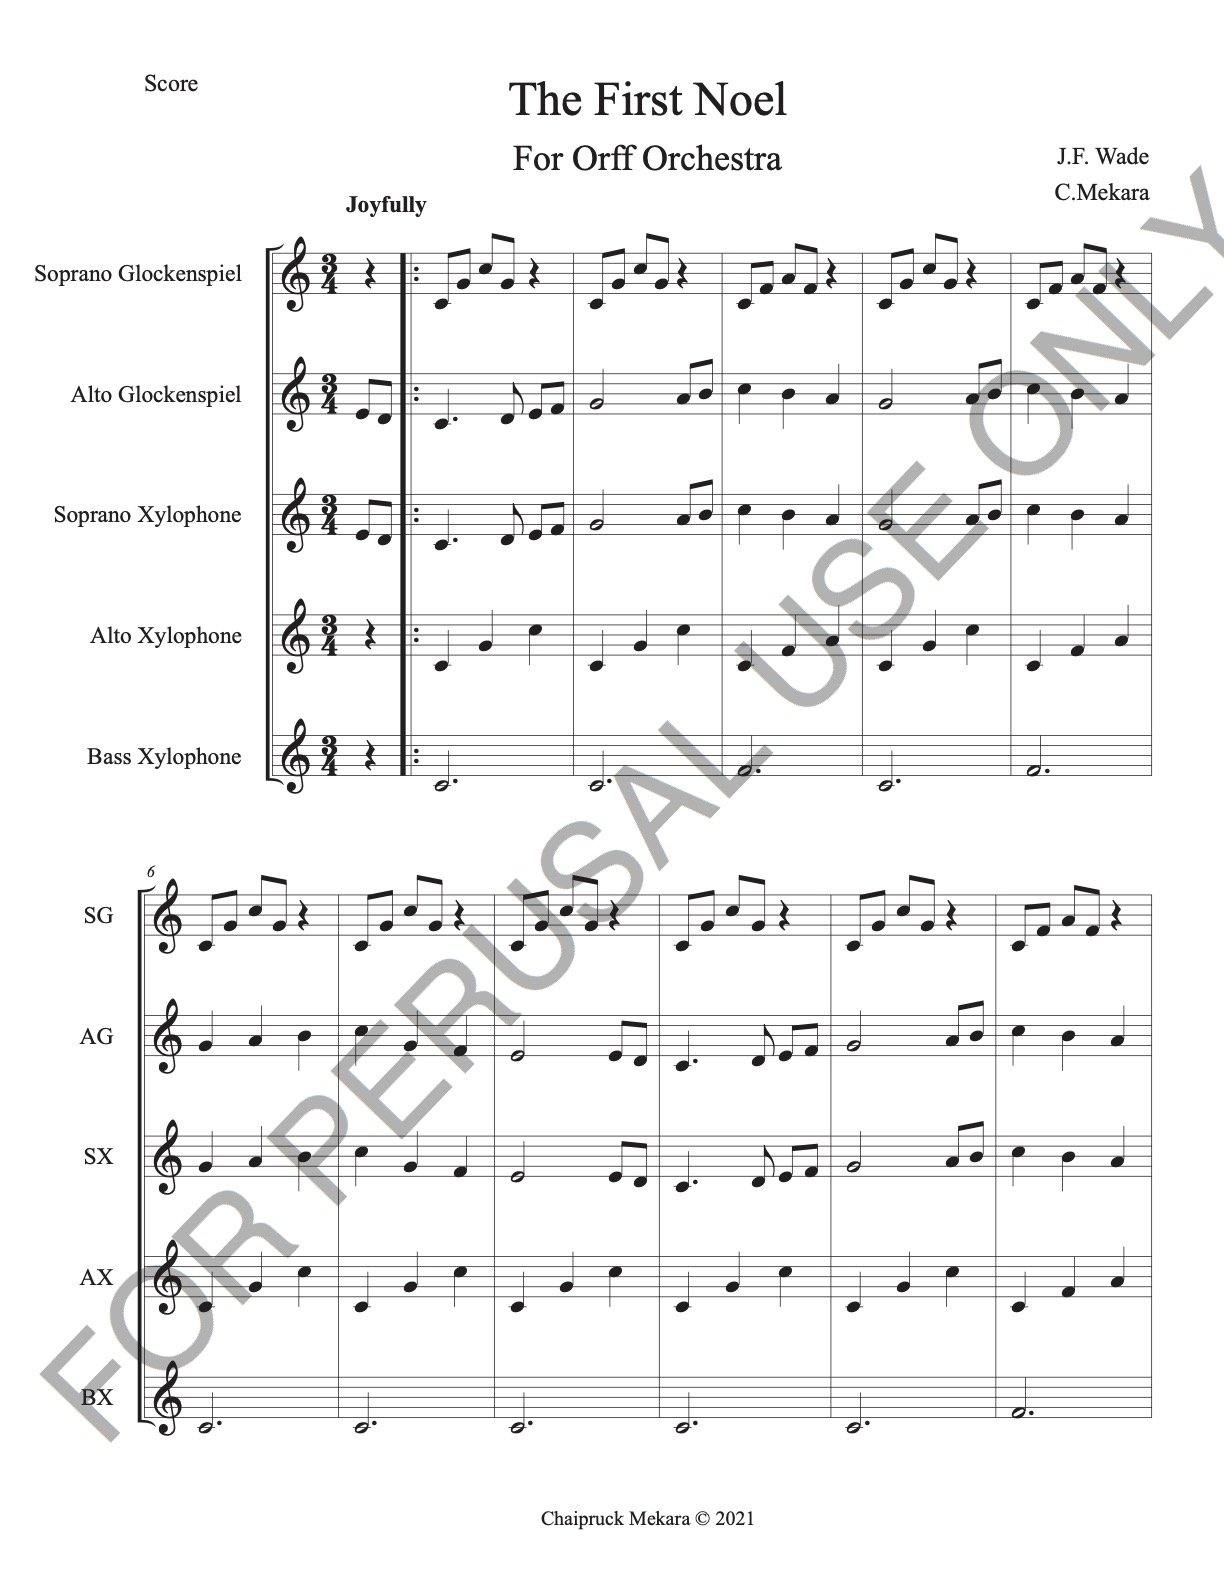 Orff Orchestra sheet music - The First Noel - ChaipruckMekara